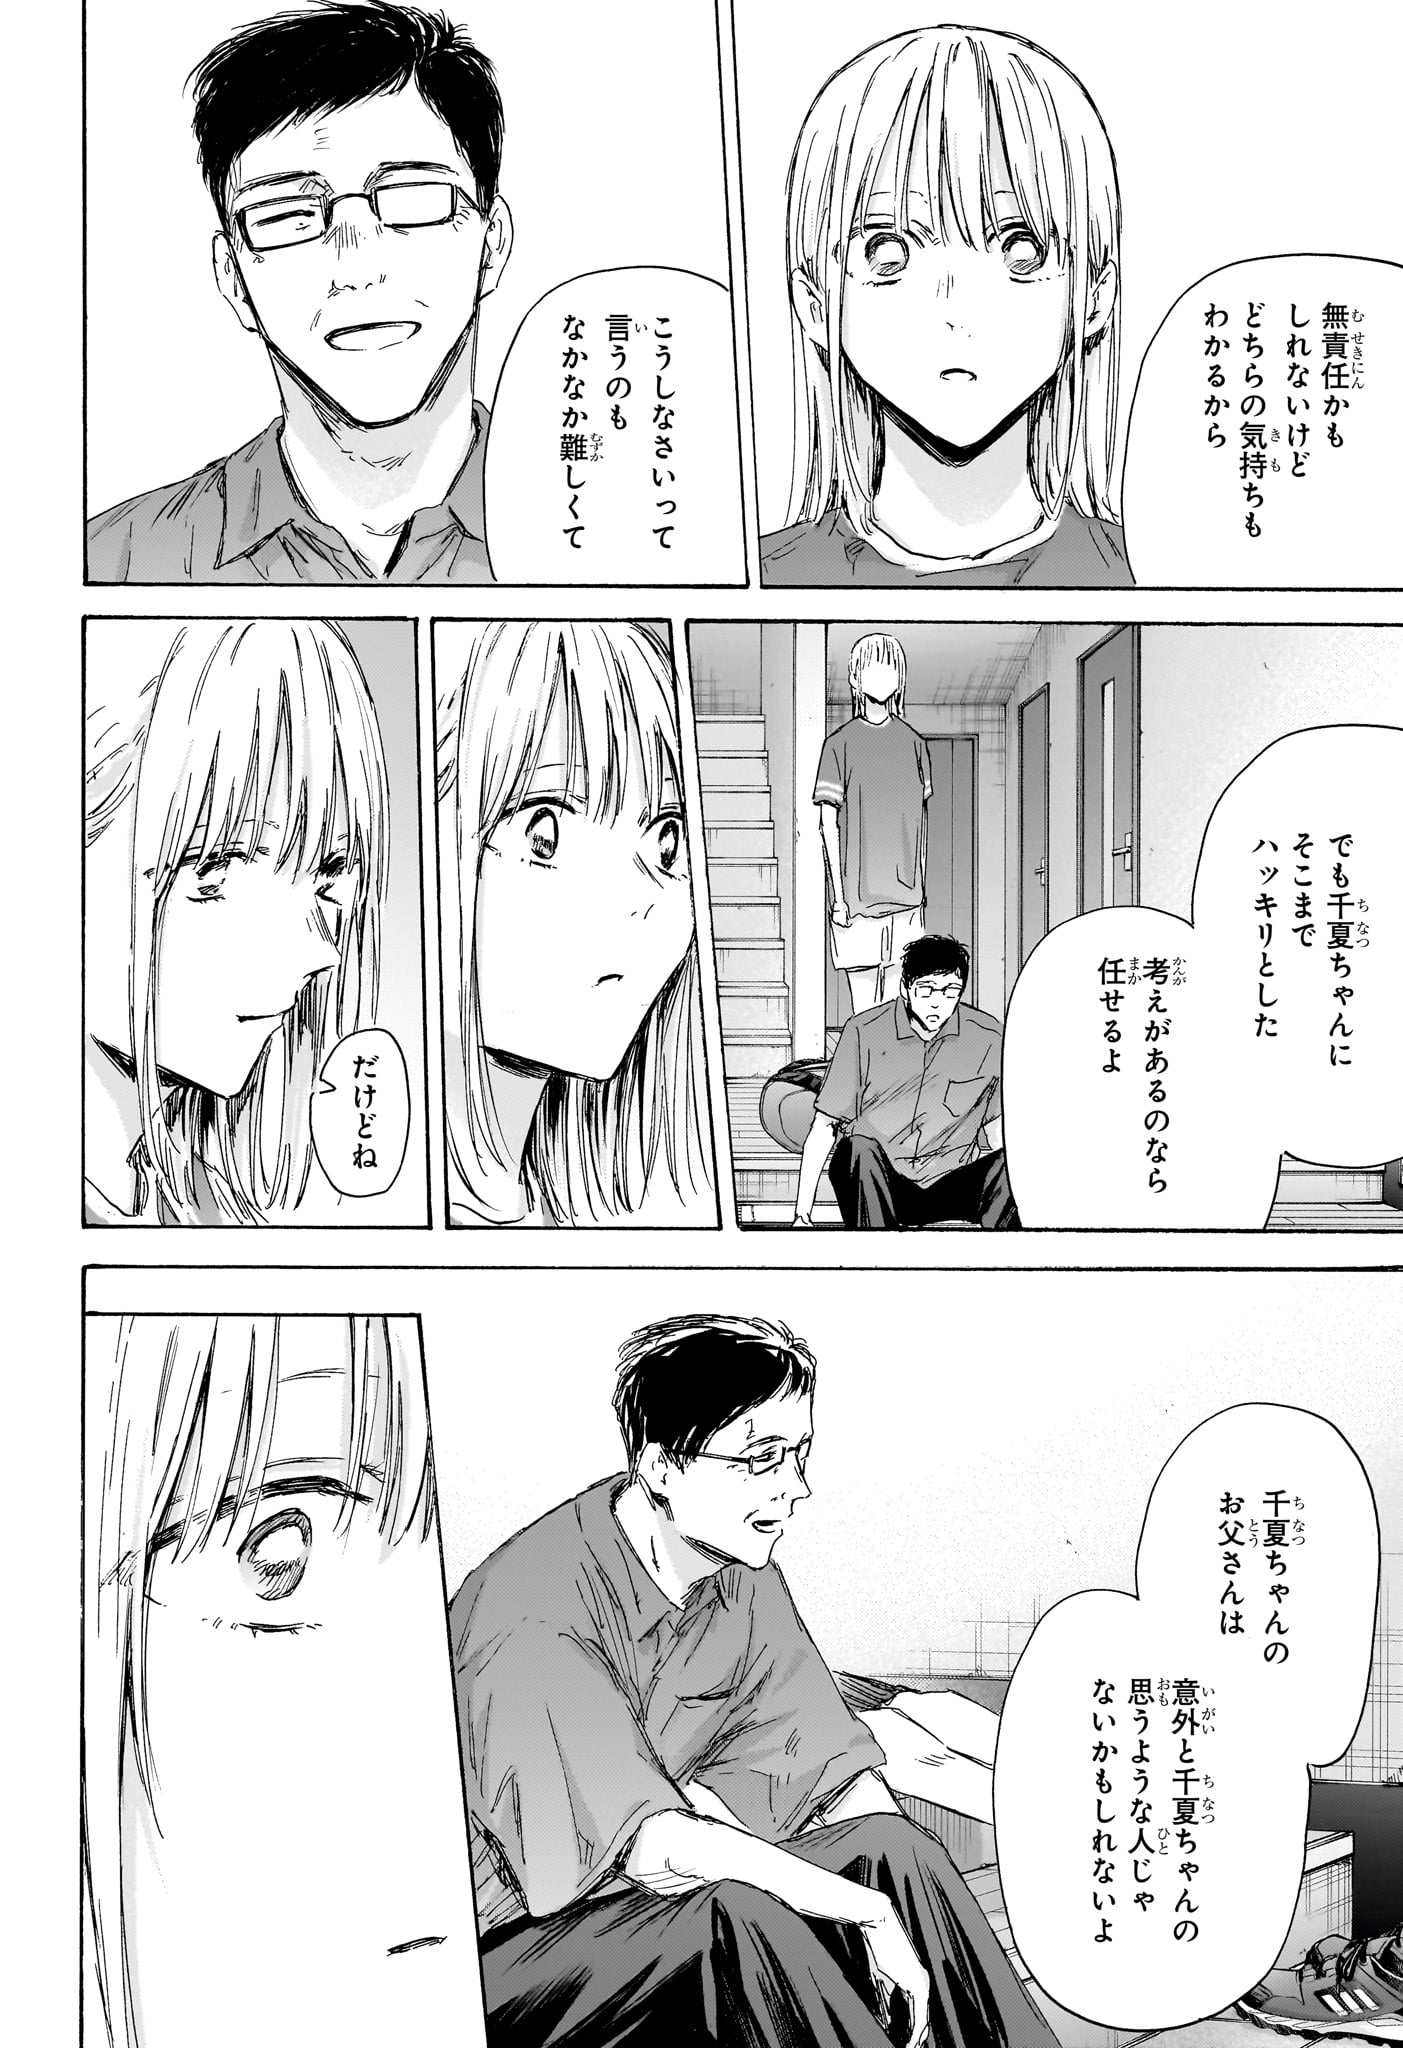 Ao no Hako - Chapter 156 - Page 8